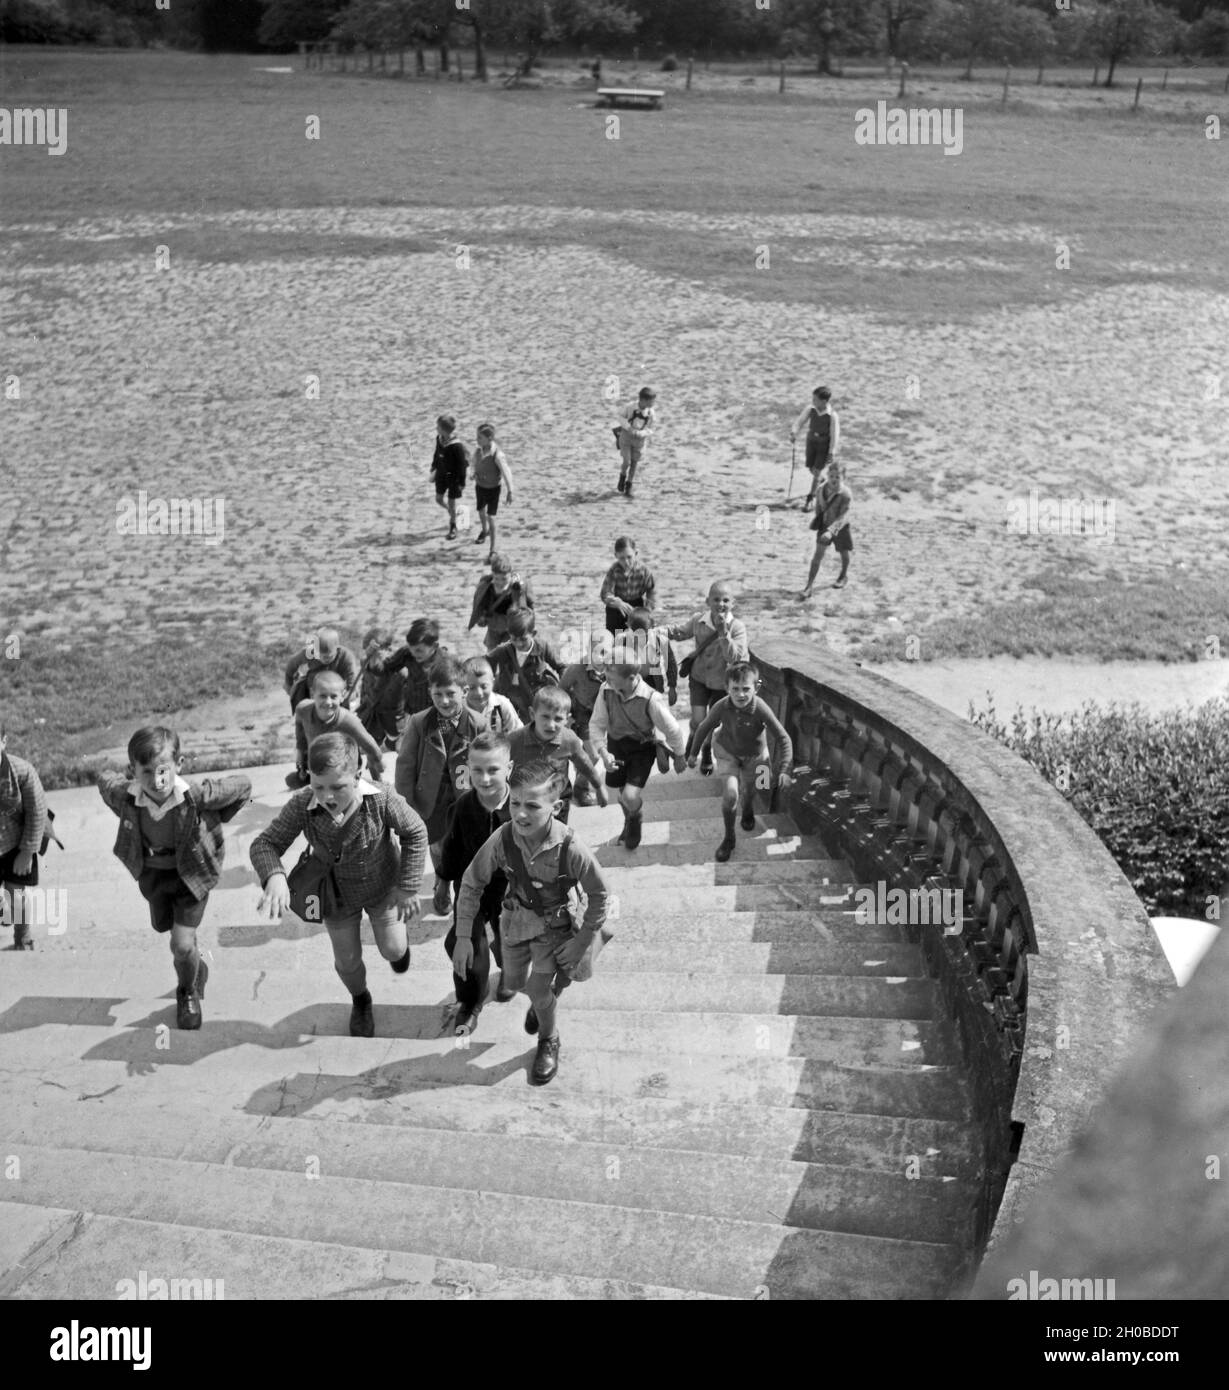 Jetzt wird's lebhaft ! Eine Gruppe kleiner Jungen besucht das Schloss Solitude à Stuttgart, Deutschland 1930er Jahre. Voici l'action : un groupe de petits garçons visiter le château de la Solitude à Stuttgart, Allemagne 1930. Banque D'Images